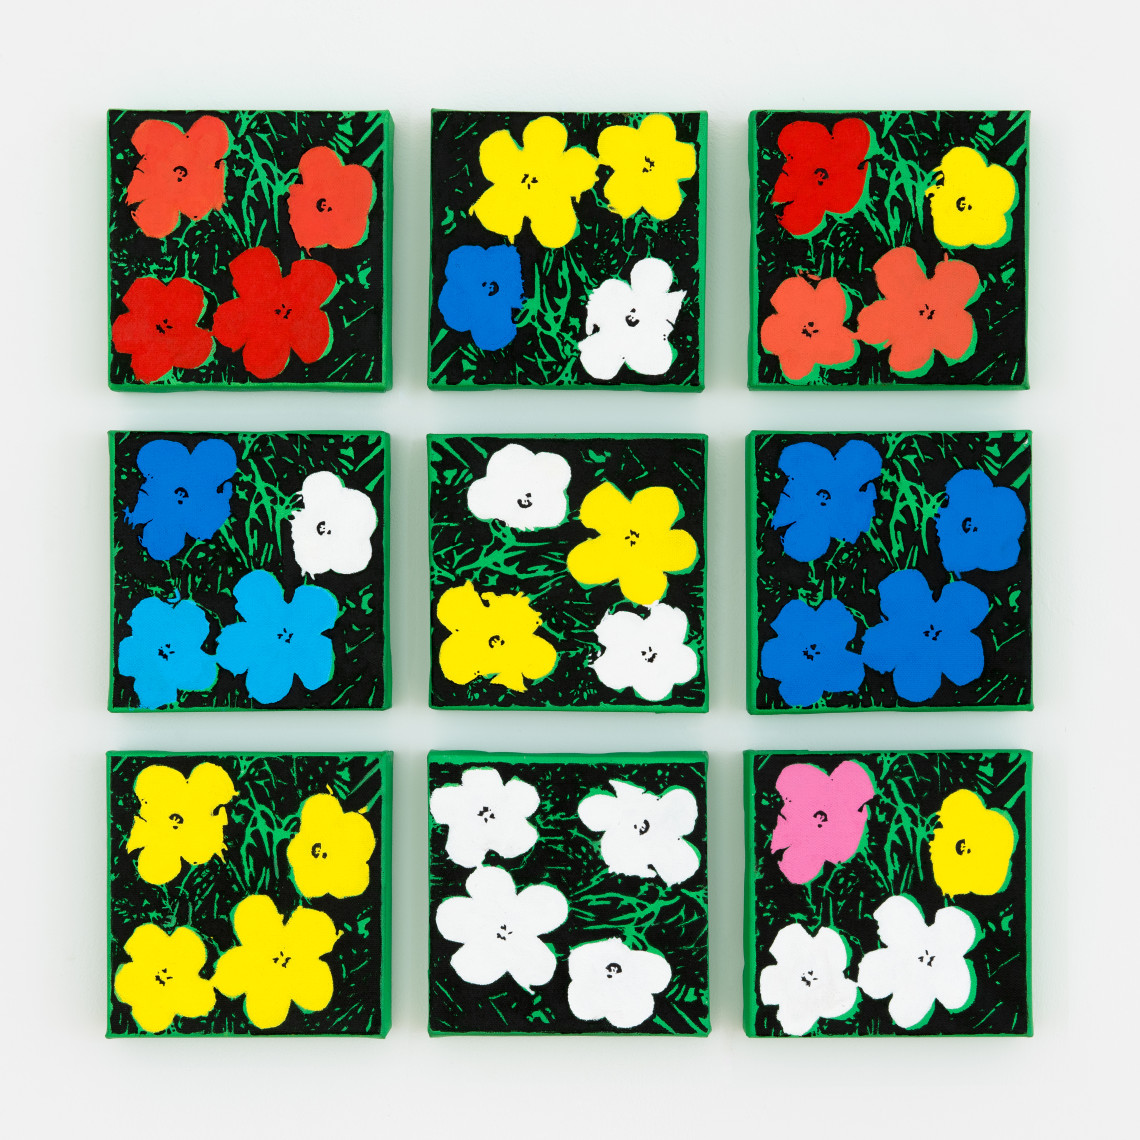  - Richard Pettibone Andy Warhol 'Flowers' 1964 (9 works) 2010 